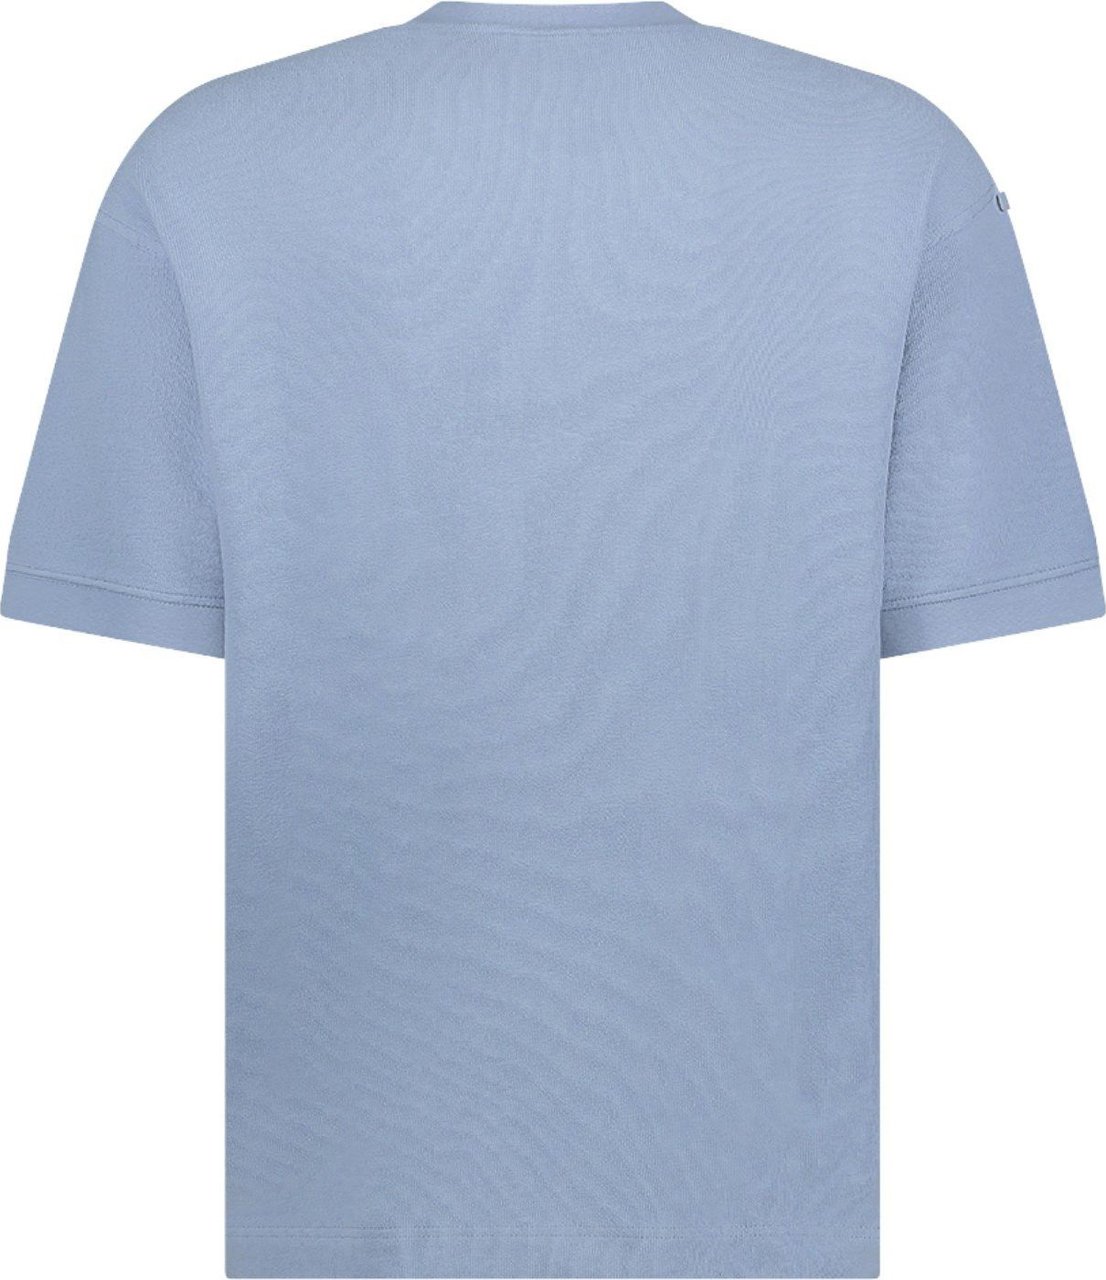 Aeden Aeden Heren T-shirt Blauw A22242819/411 Jordan Blauw